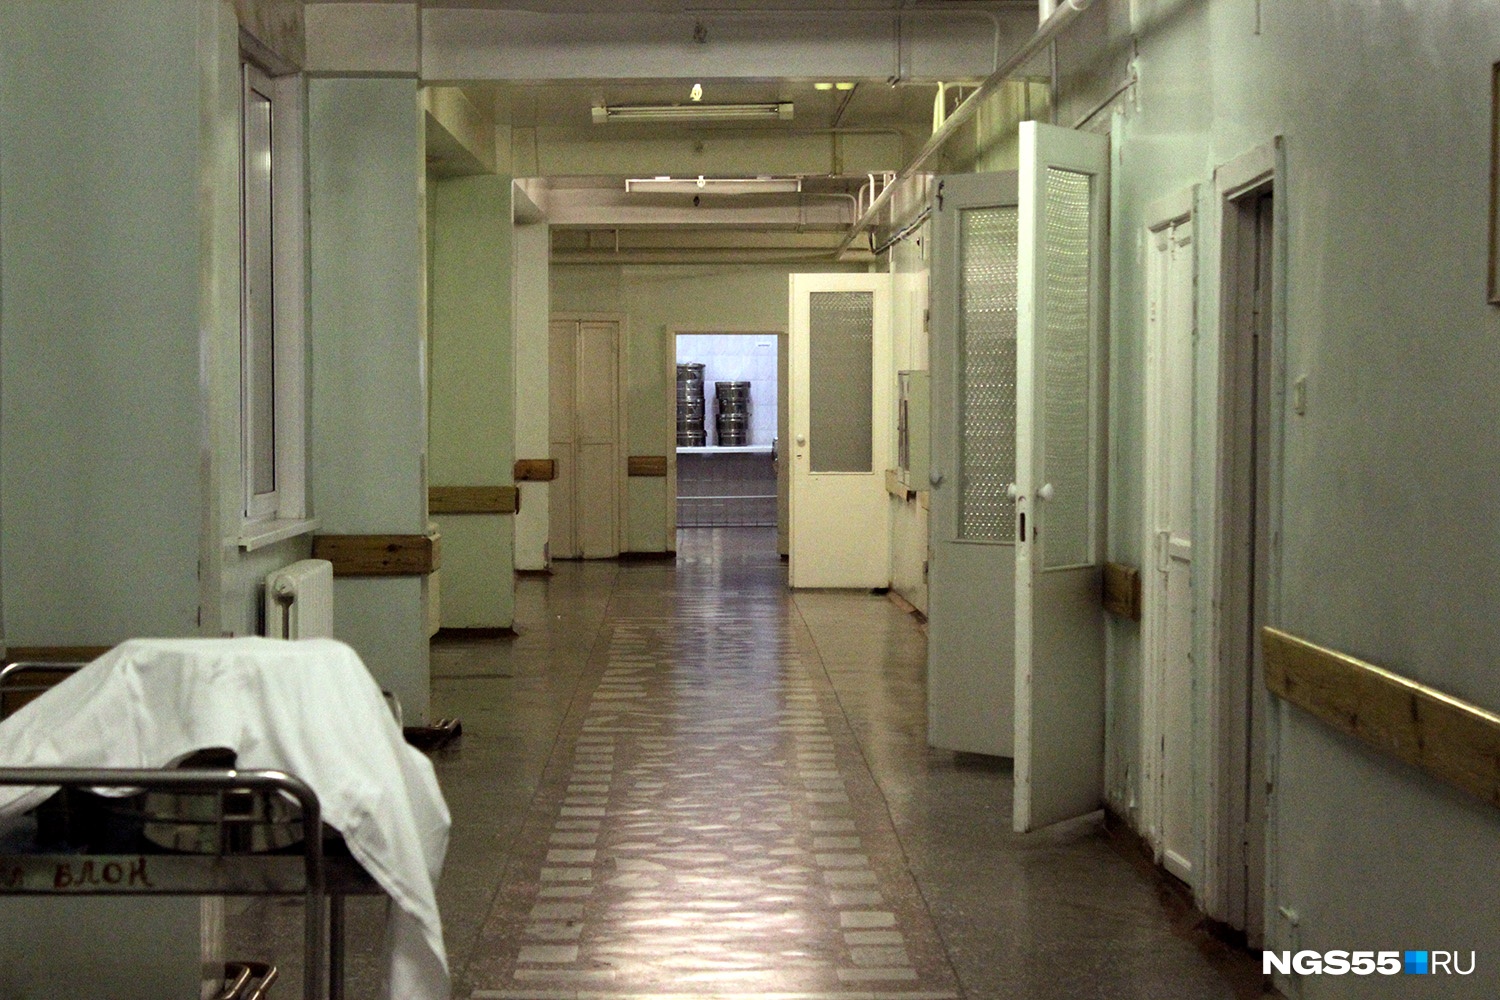 Старый больничный коридор